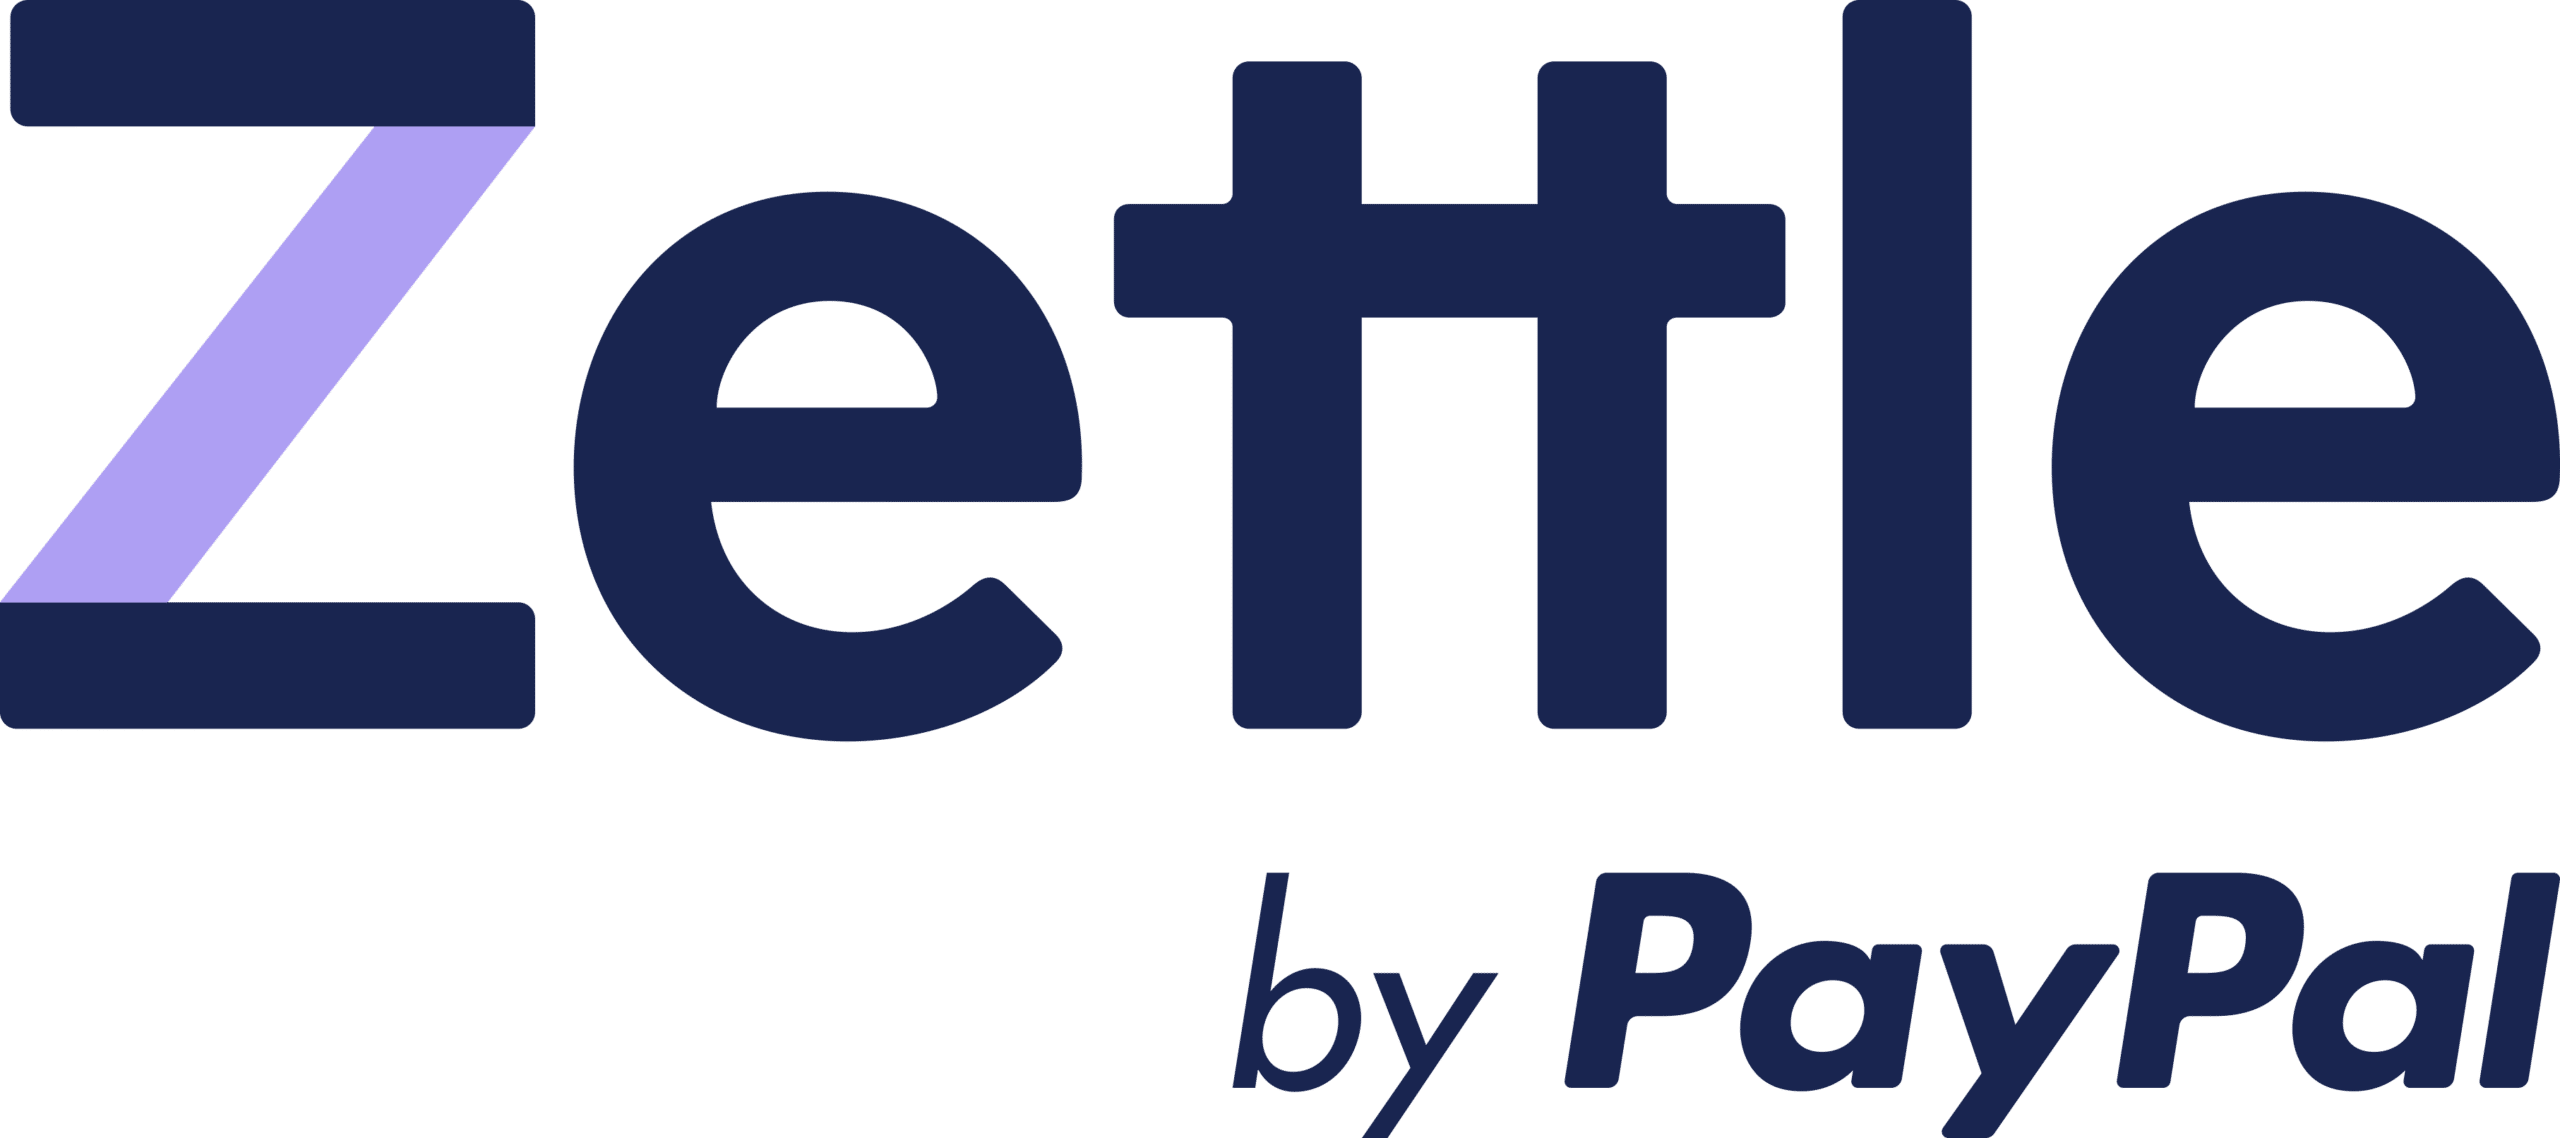 zettle logo tpe